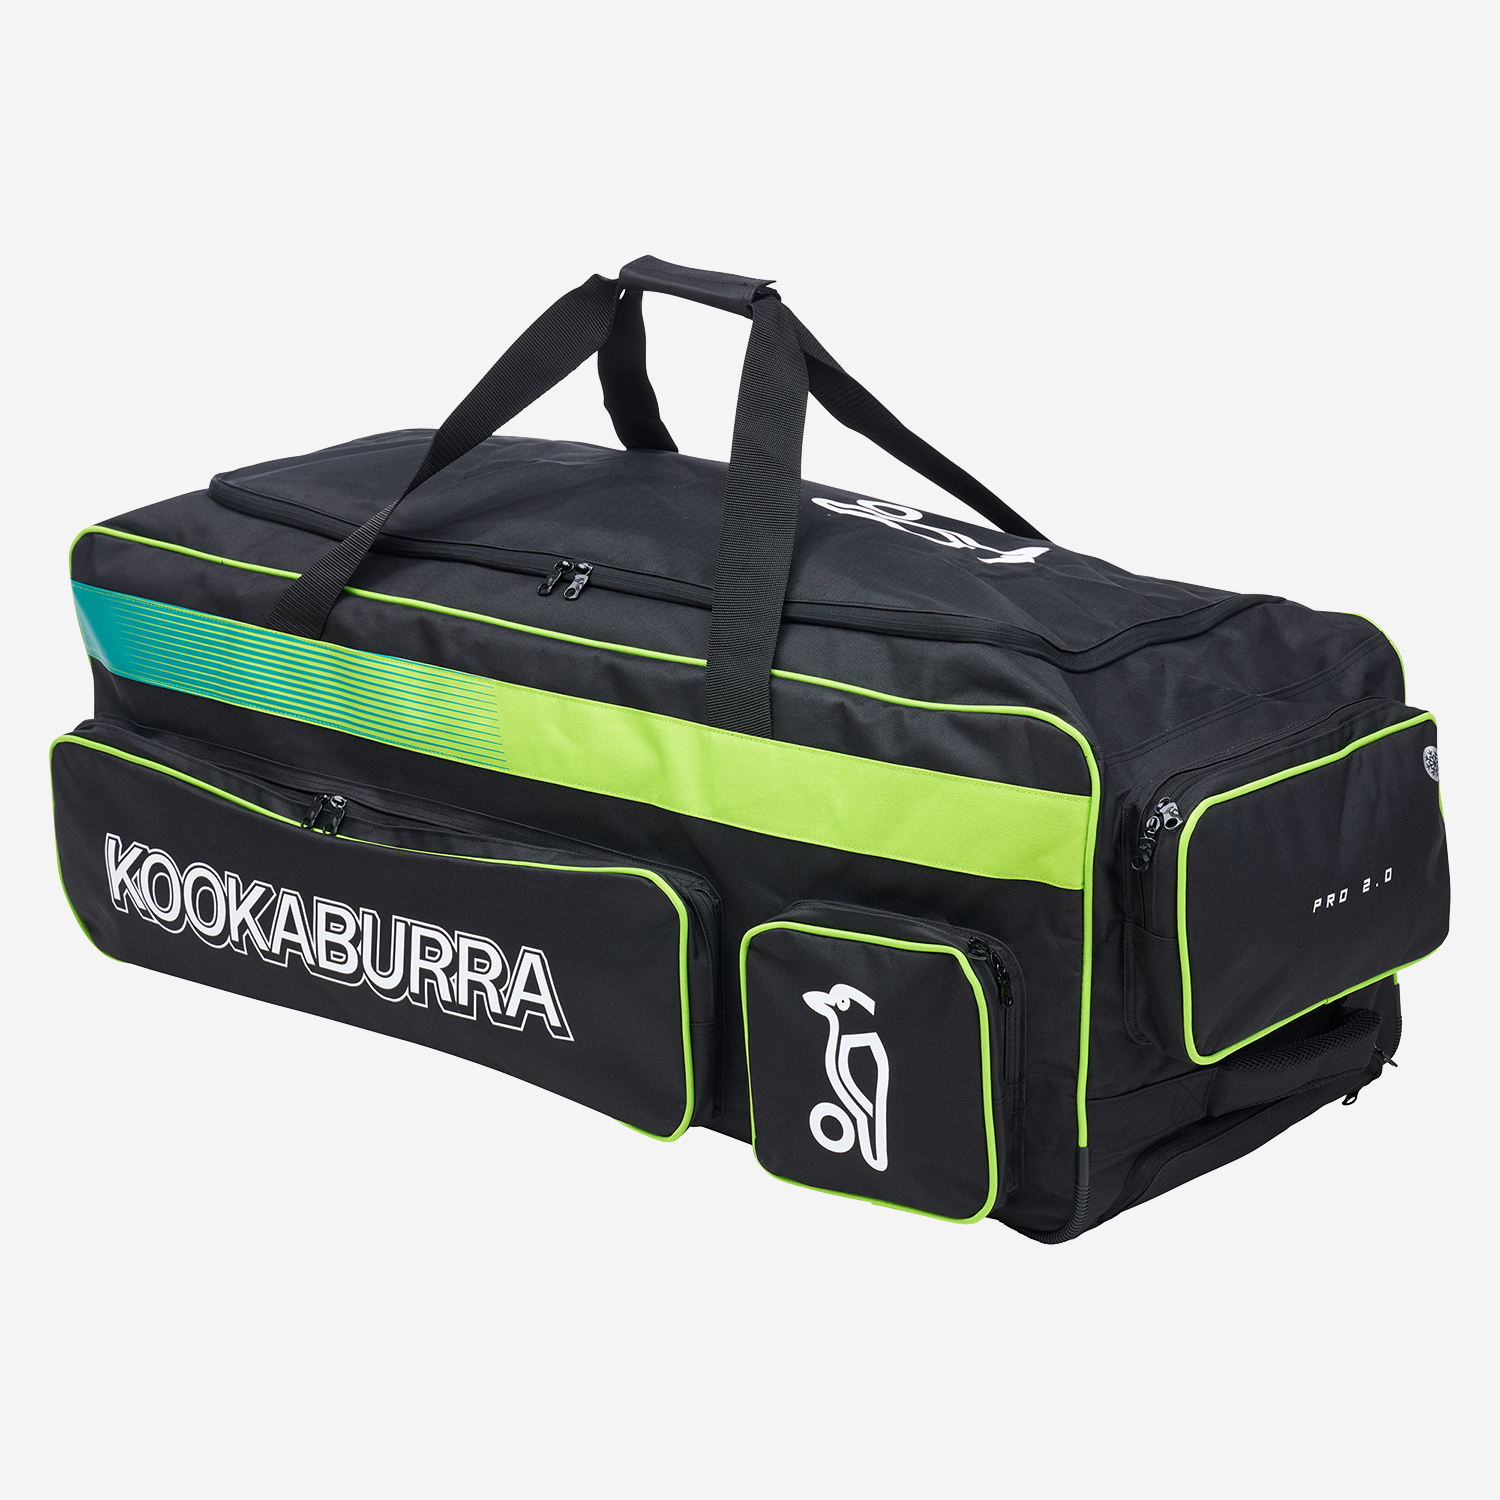 Pro 2.0 Cricket Wheelie Bags